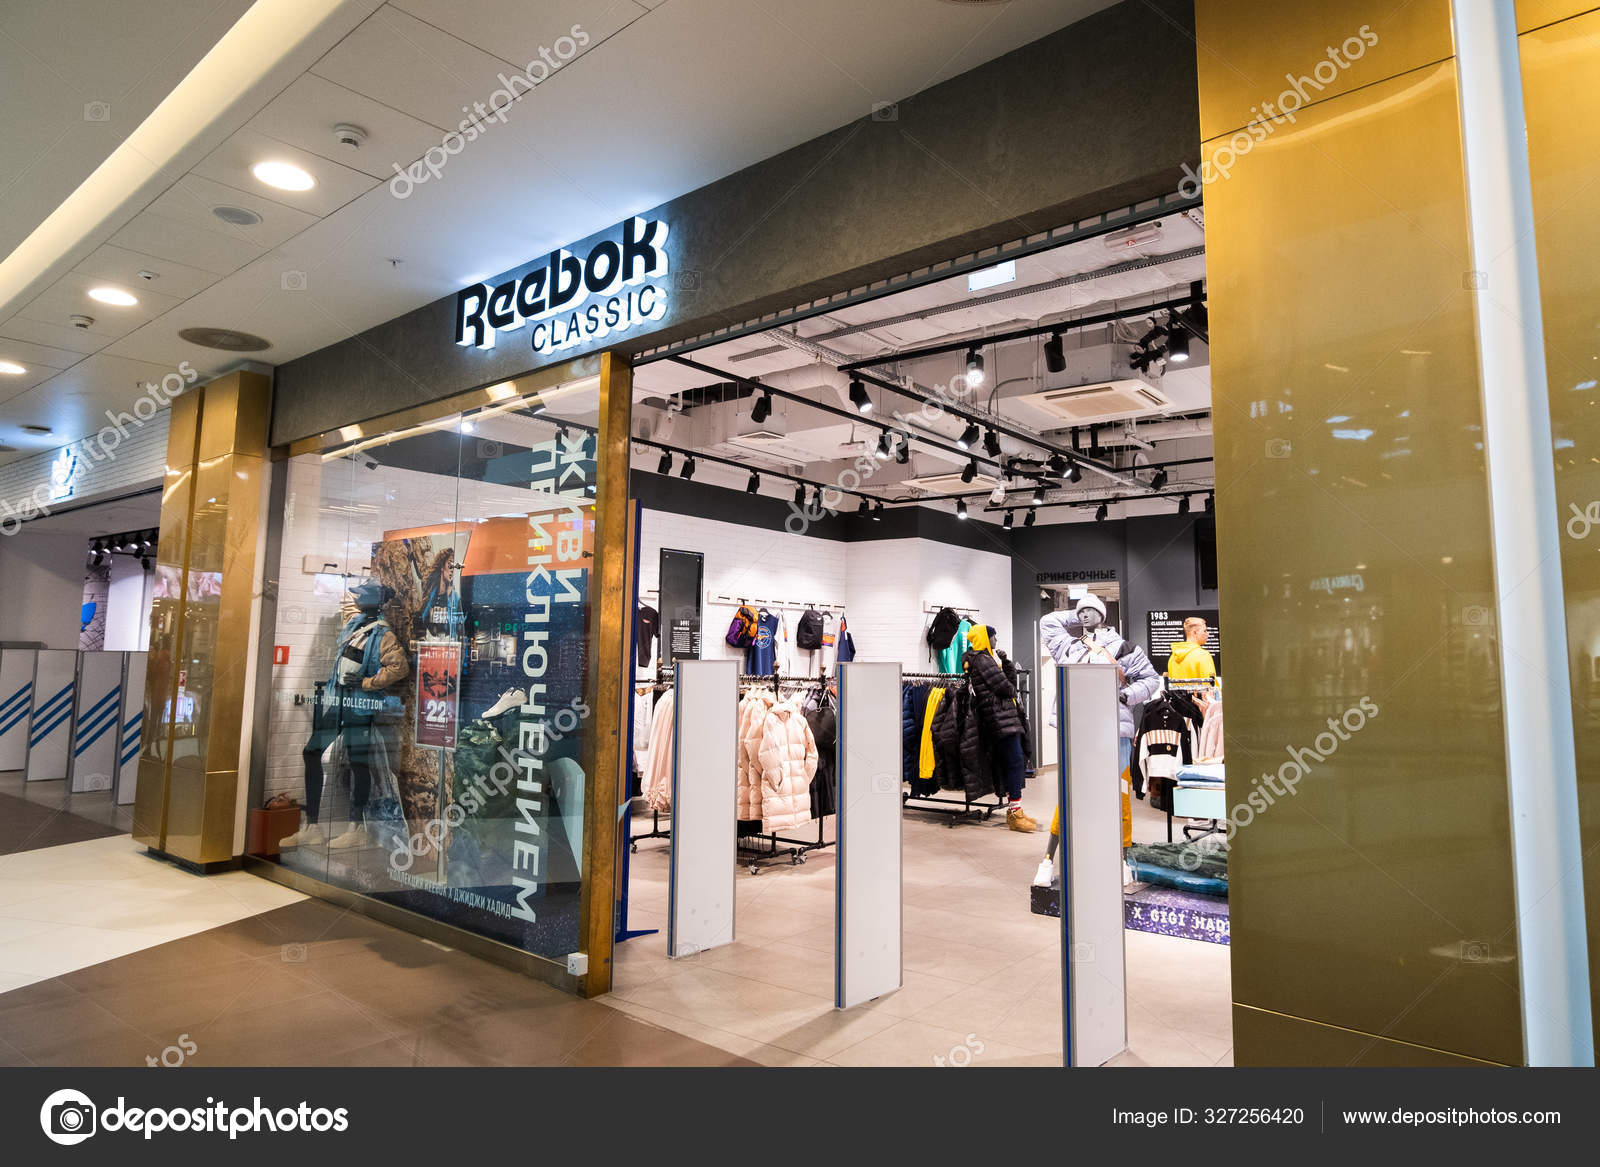 Reebok Classic Store Galeria Shopping Mall Saint Petersburg Russia Reebok – Stock Editorial © Morumotto1 #327256420